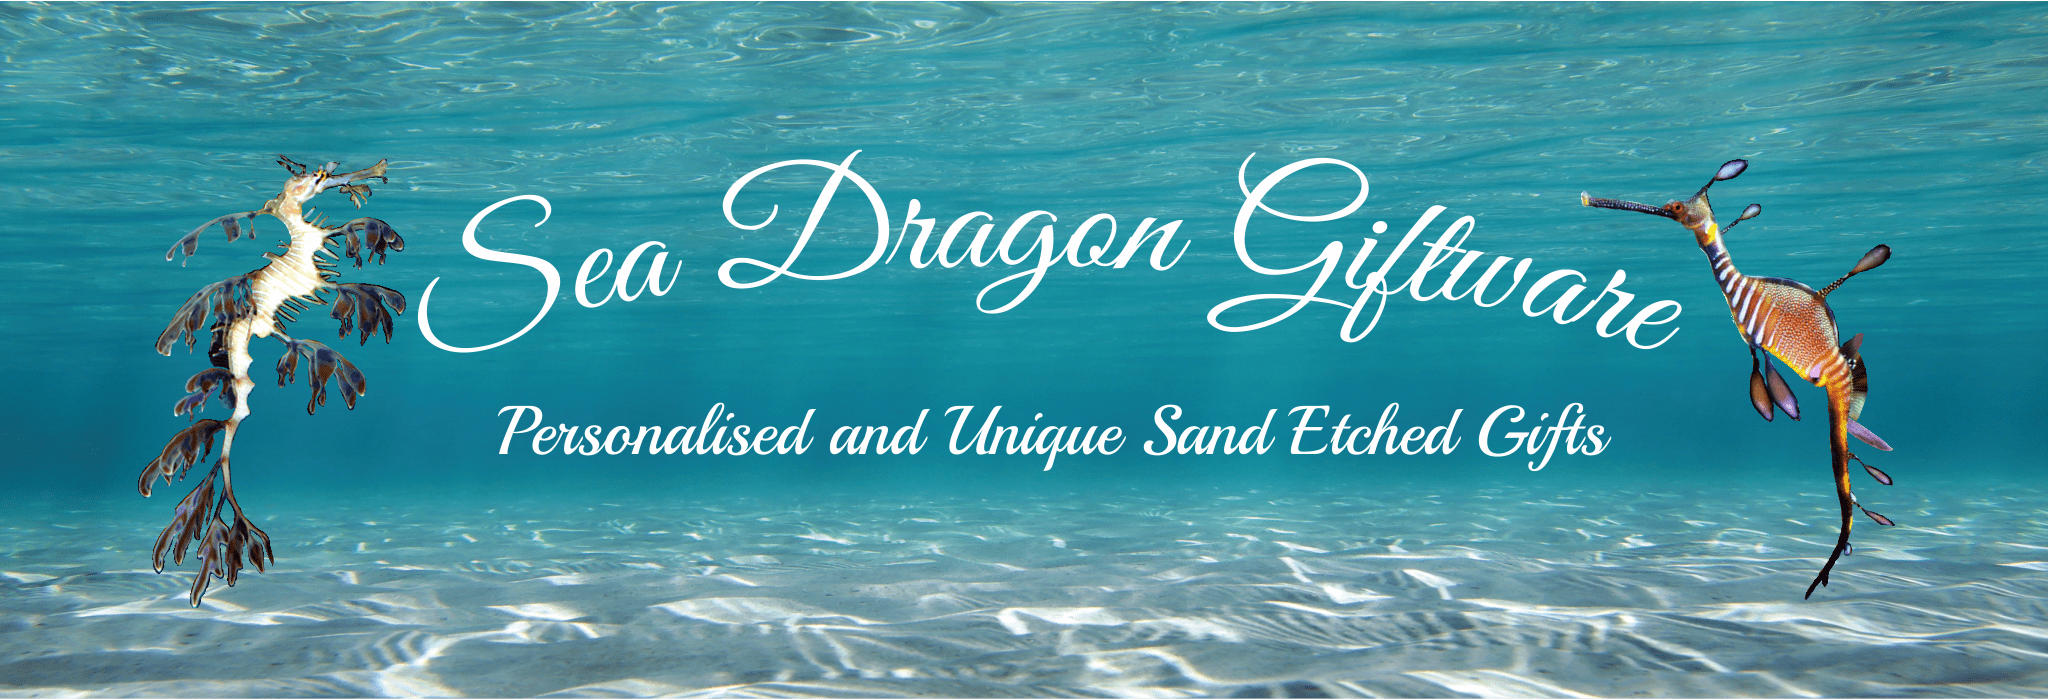 Sea Dragon Giftware